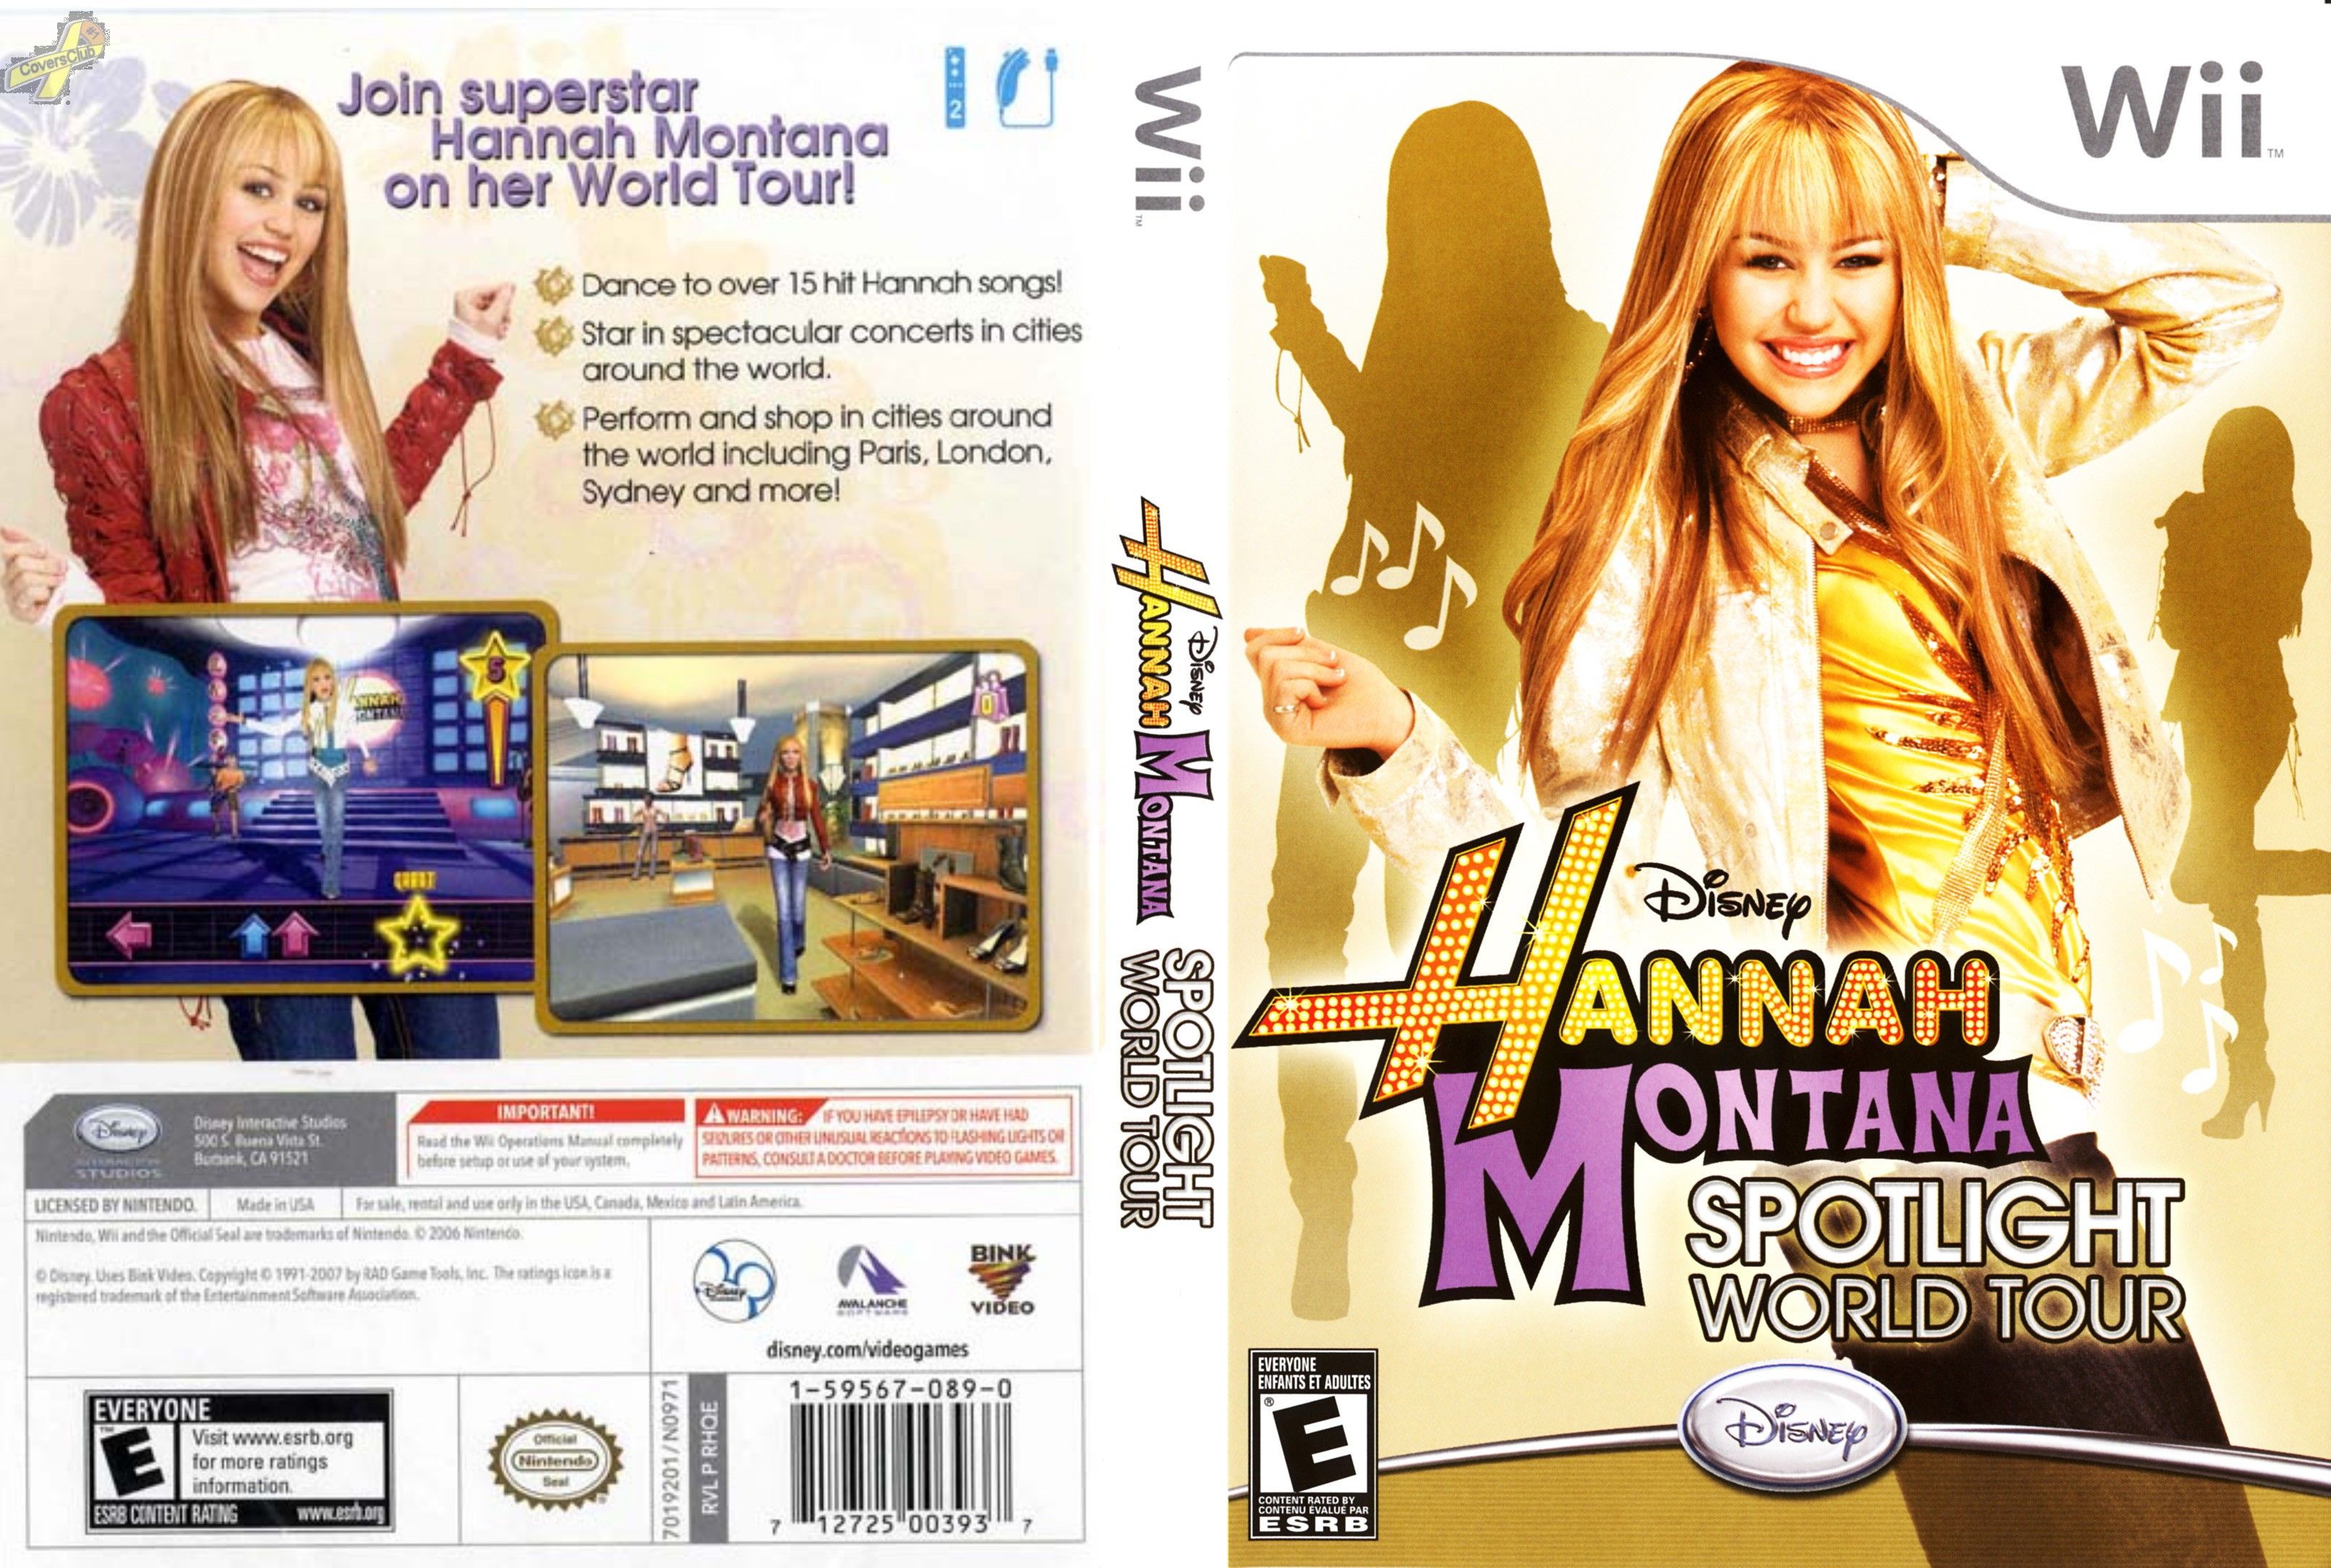 Hannah Montana Spotlight World Tour NTSC Wii FULL.jpg.